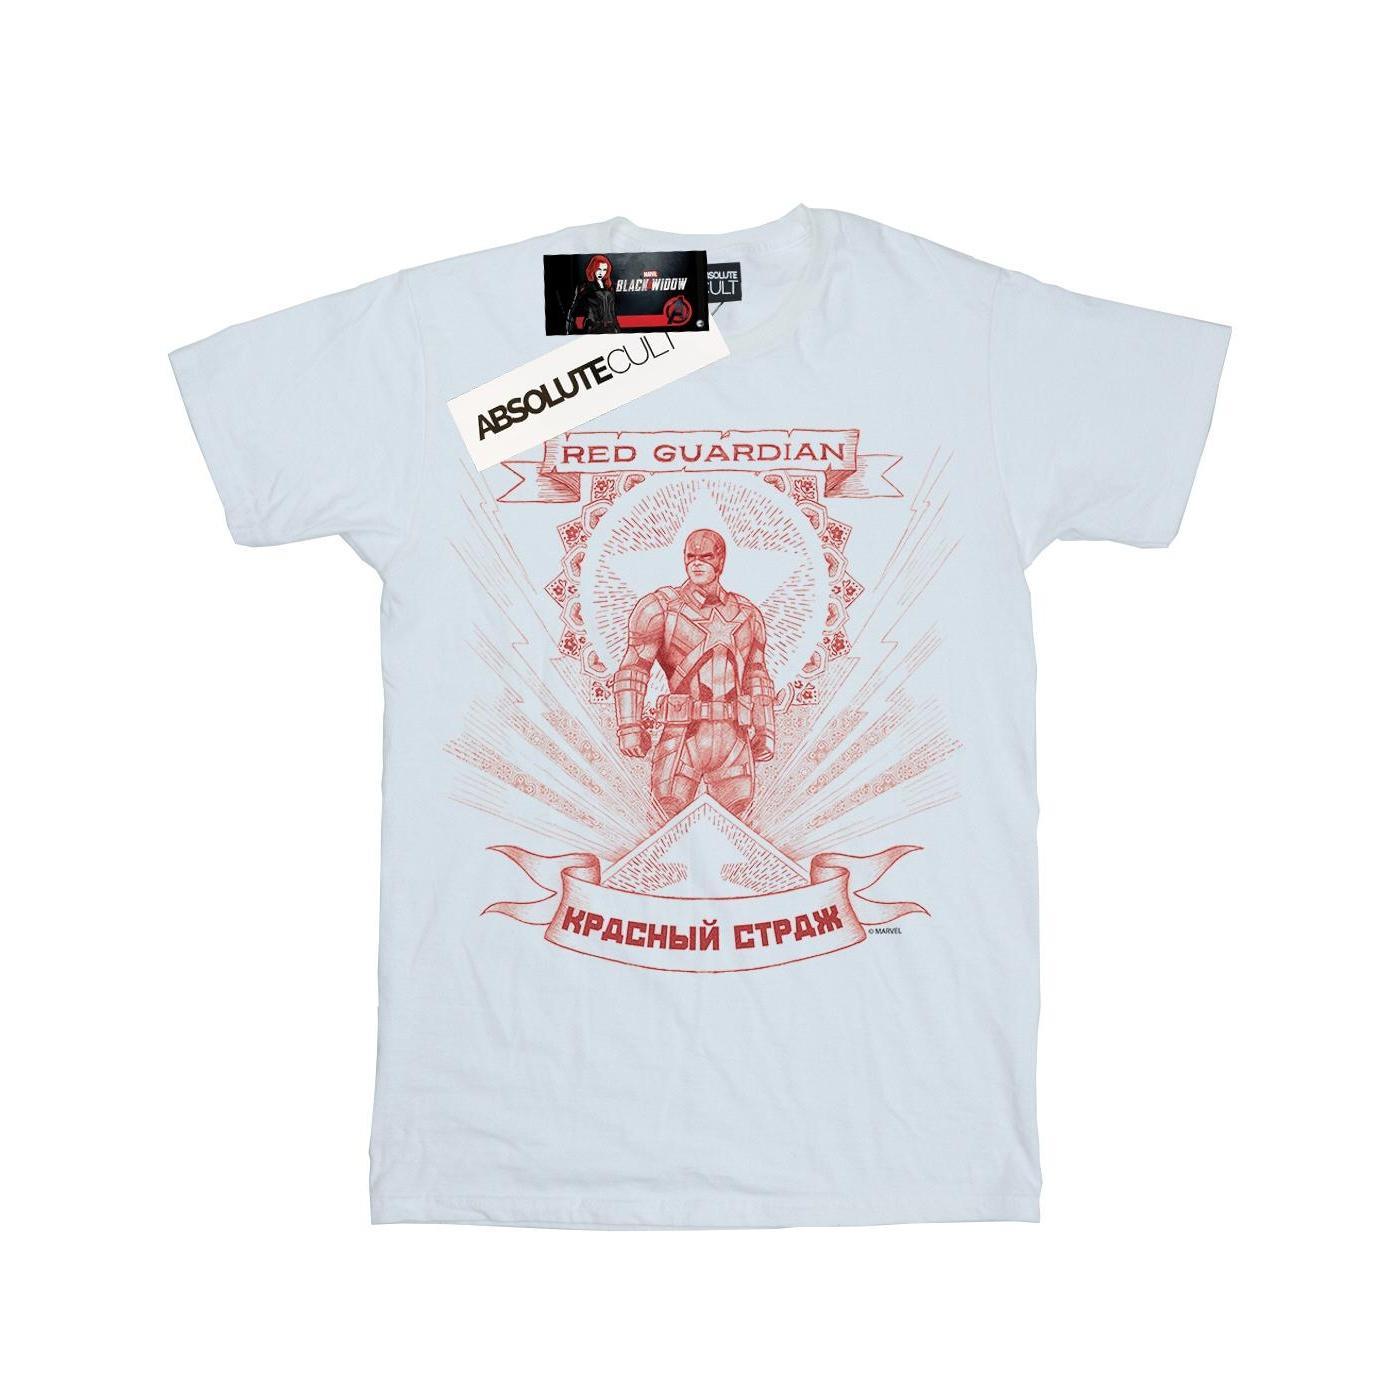 Marvel Girls Black Widow Movie Red Guardian Propaganda Cotton T-Shirt (White) (9-11 Years)